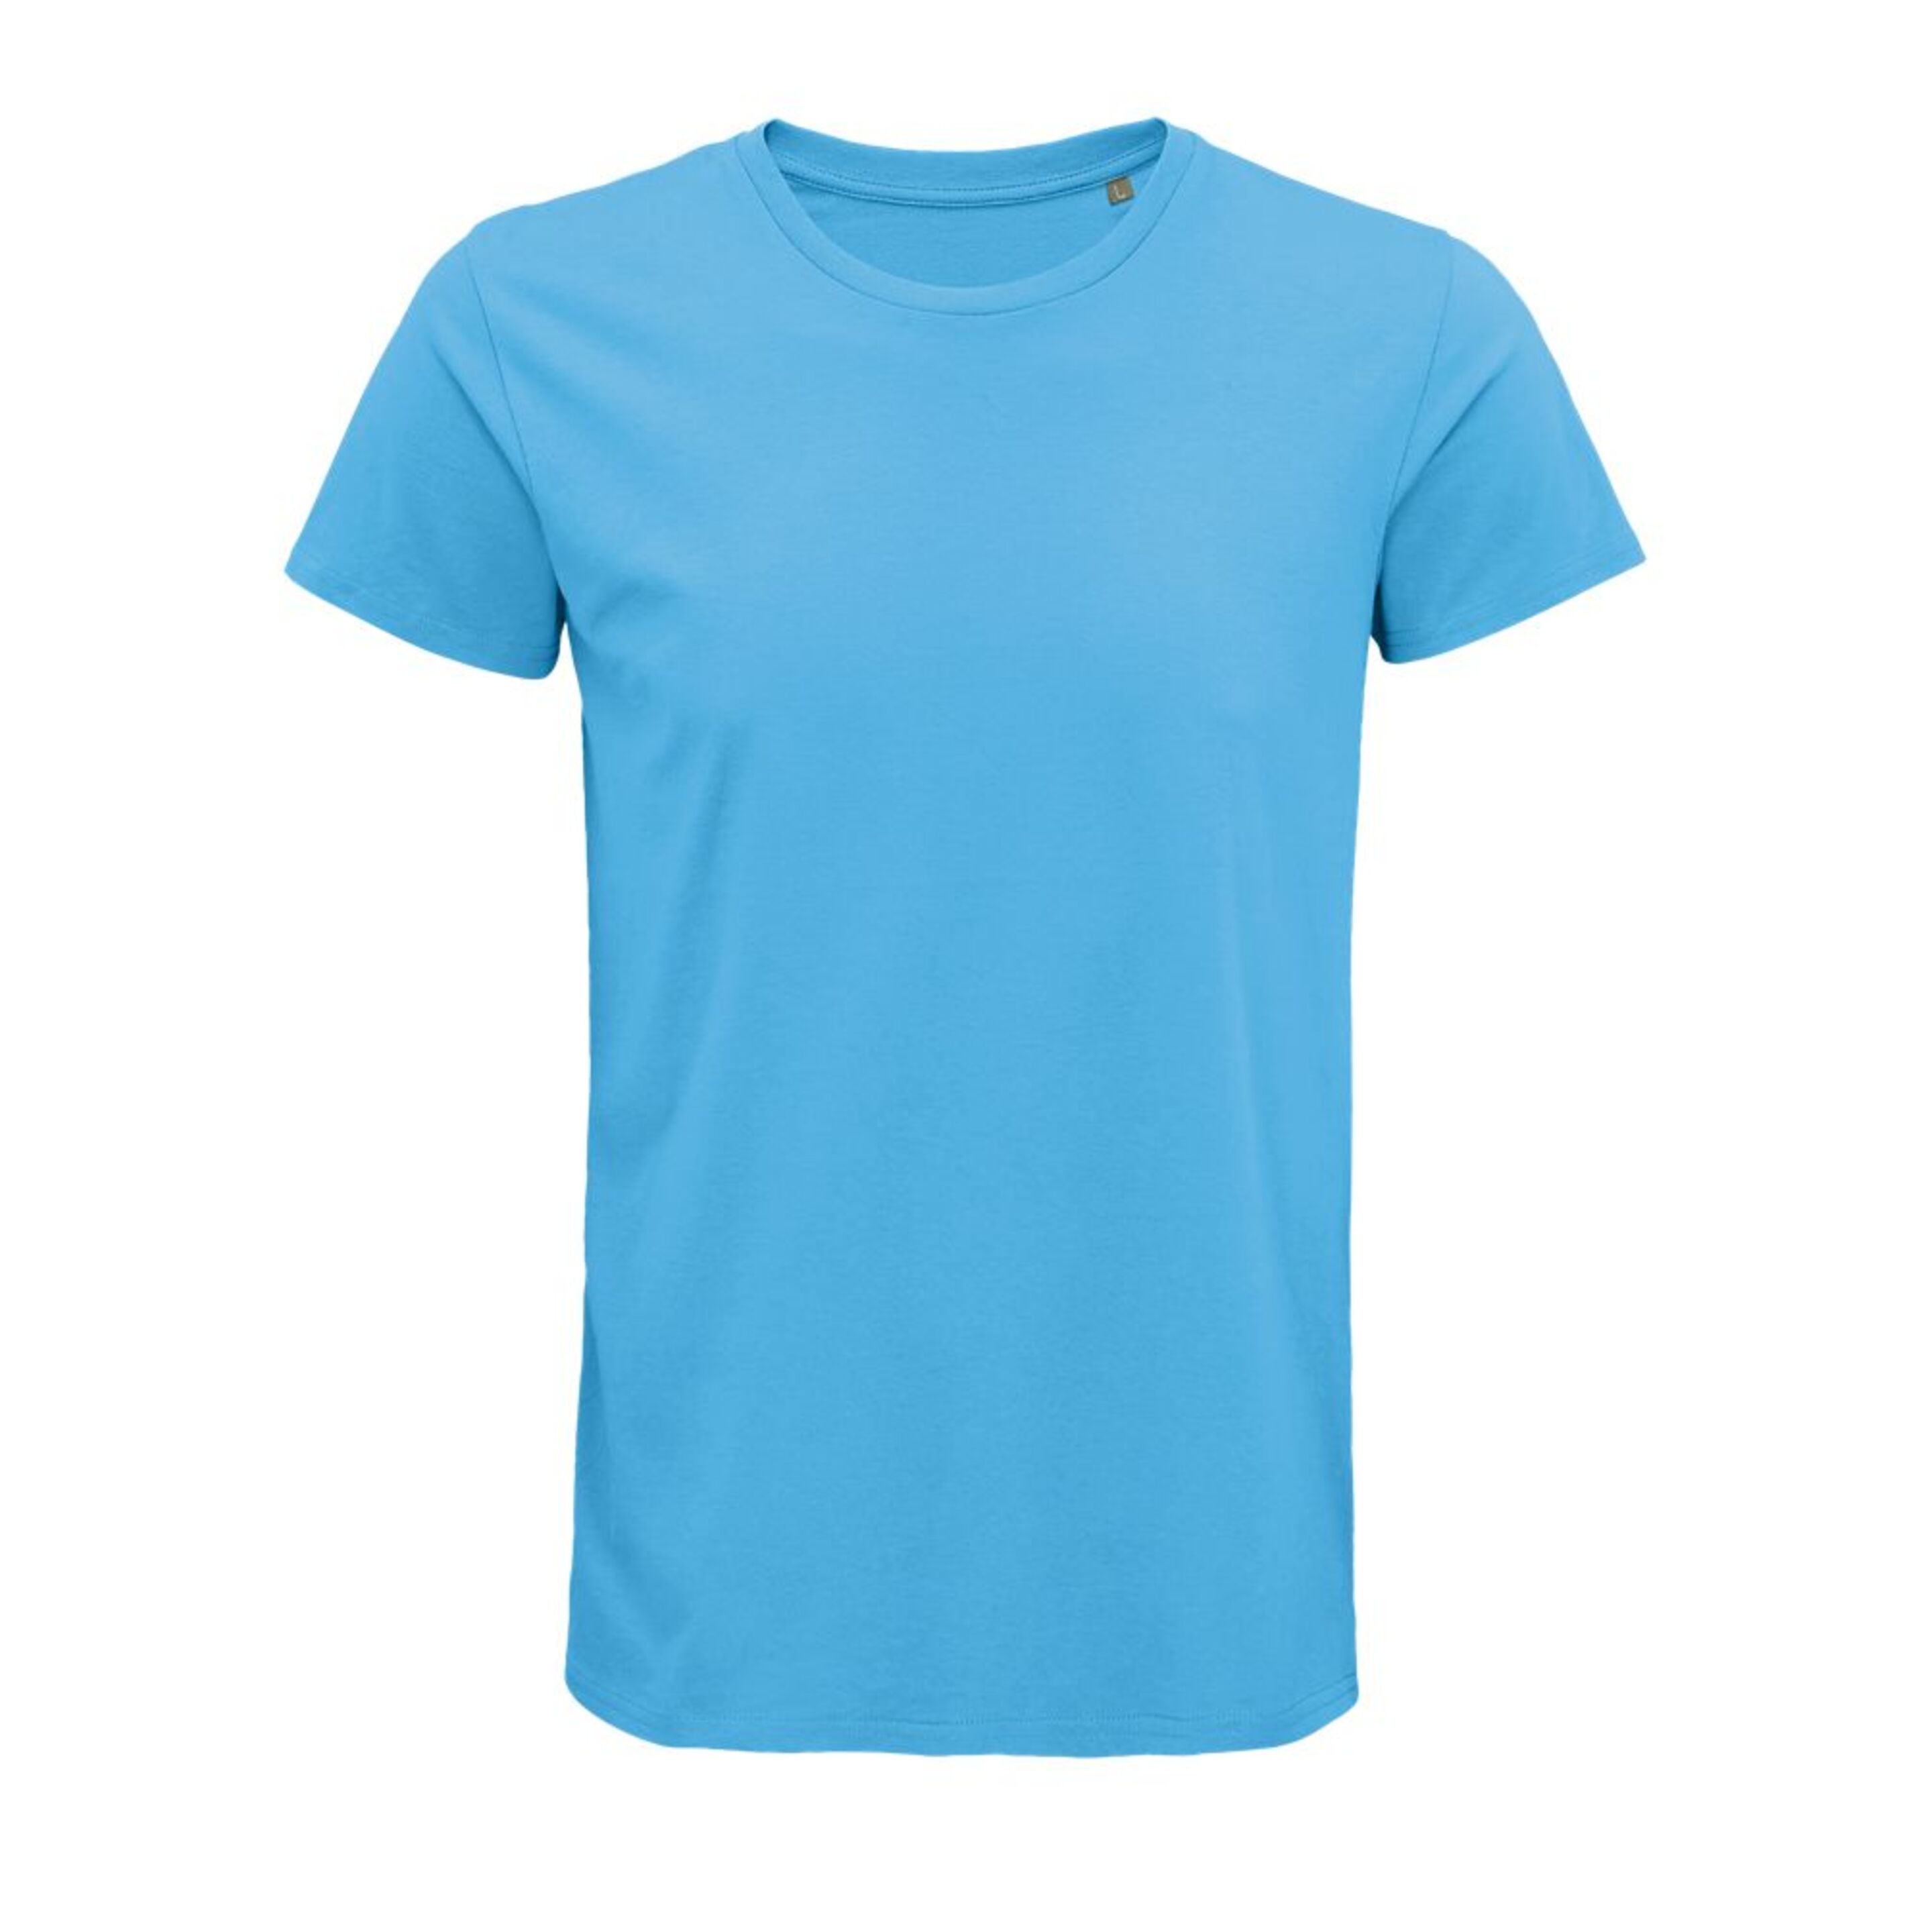 Camiseta Marnaula Crusader - Azul Claro - Modelo Adulto  MKP